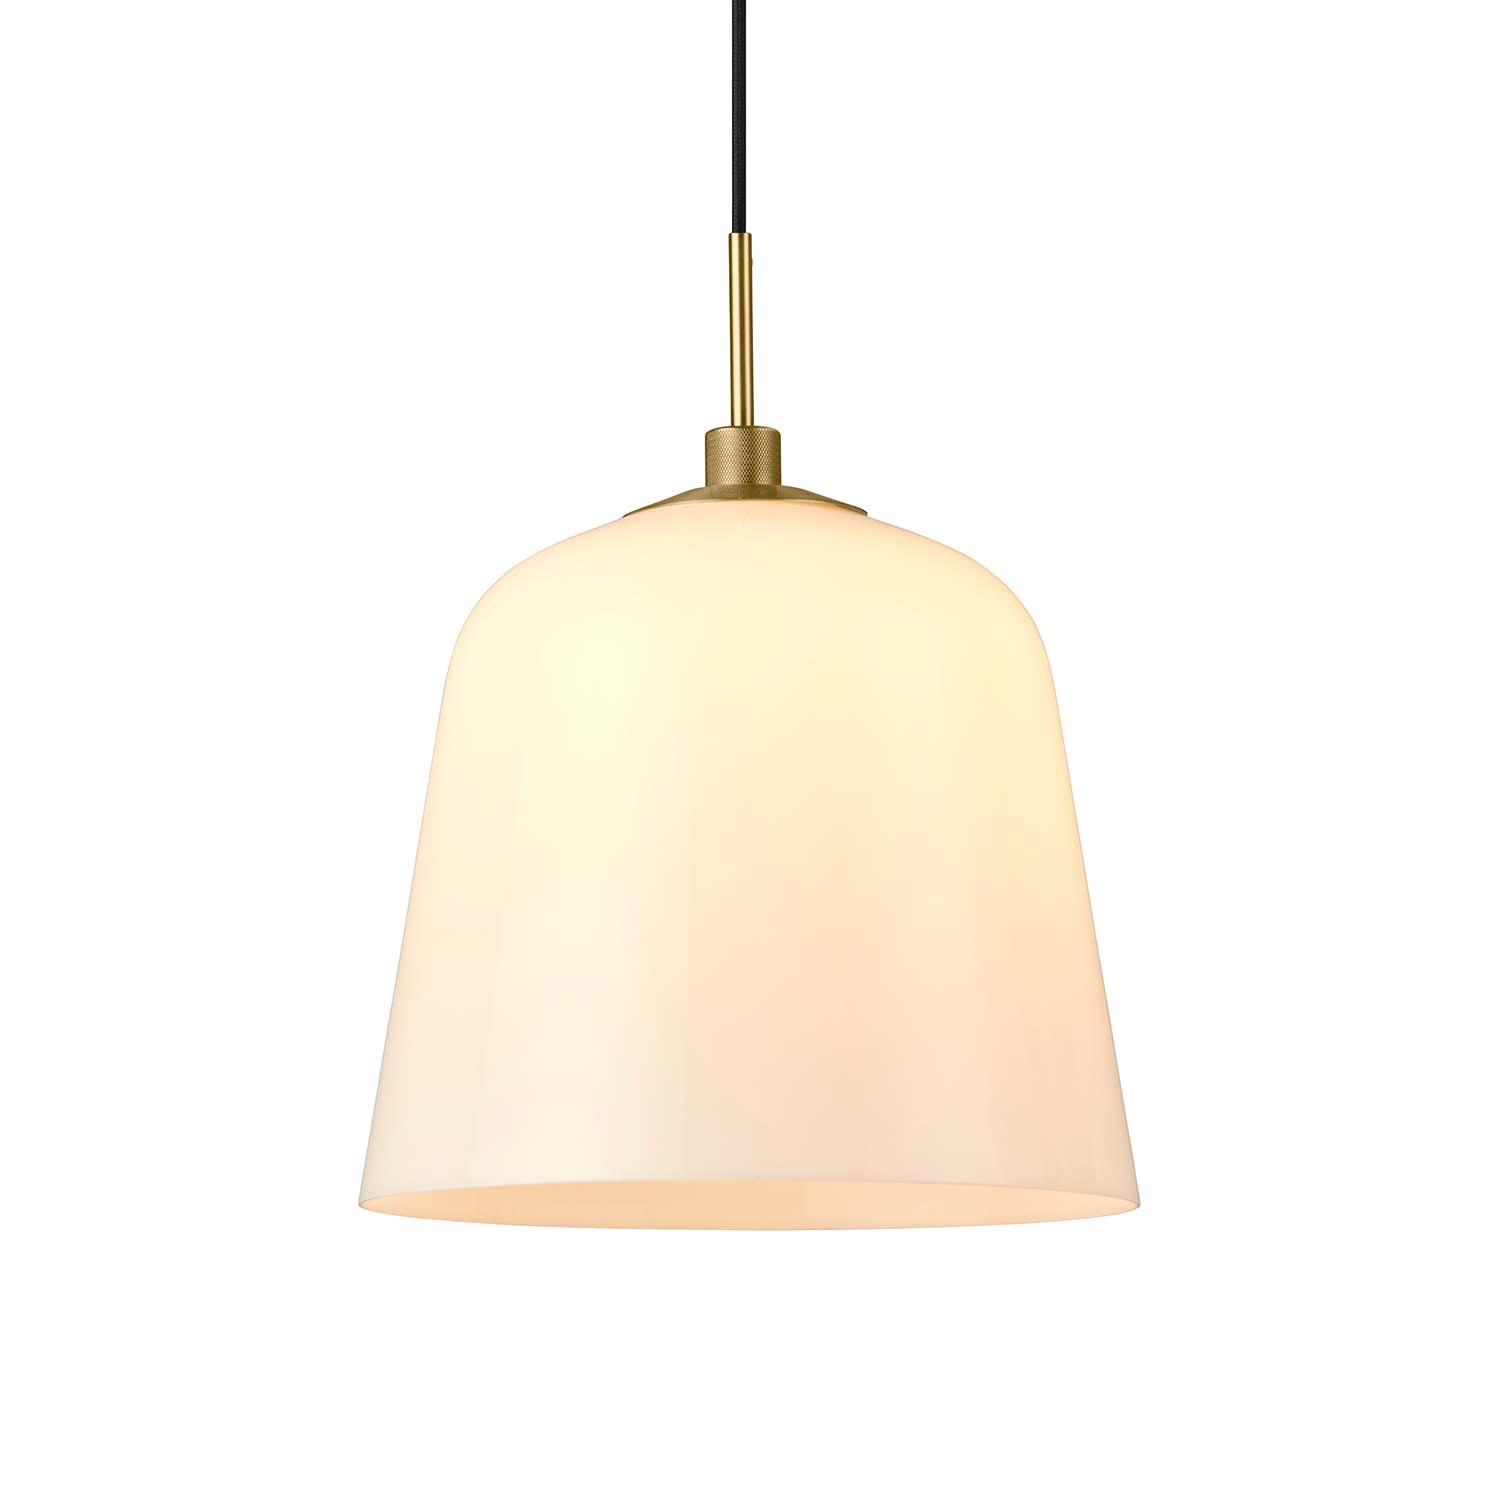 ROOM 49 - White opaque glass bell pendant light